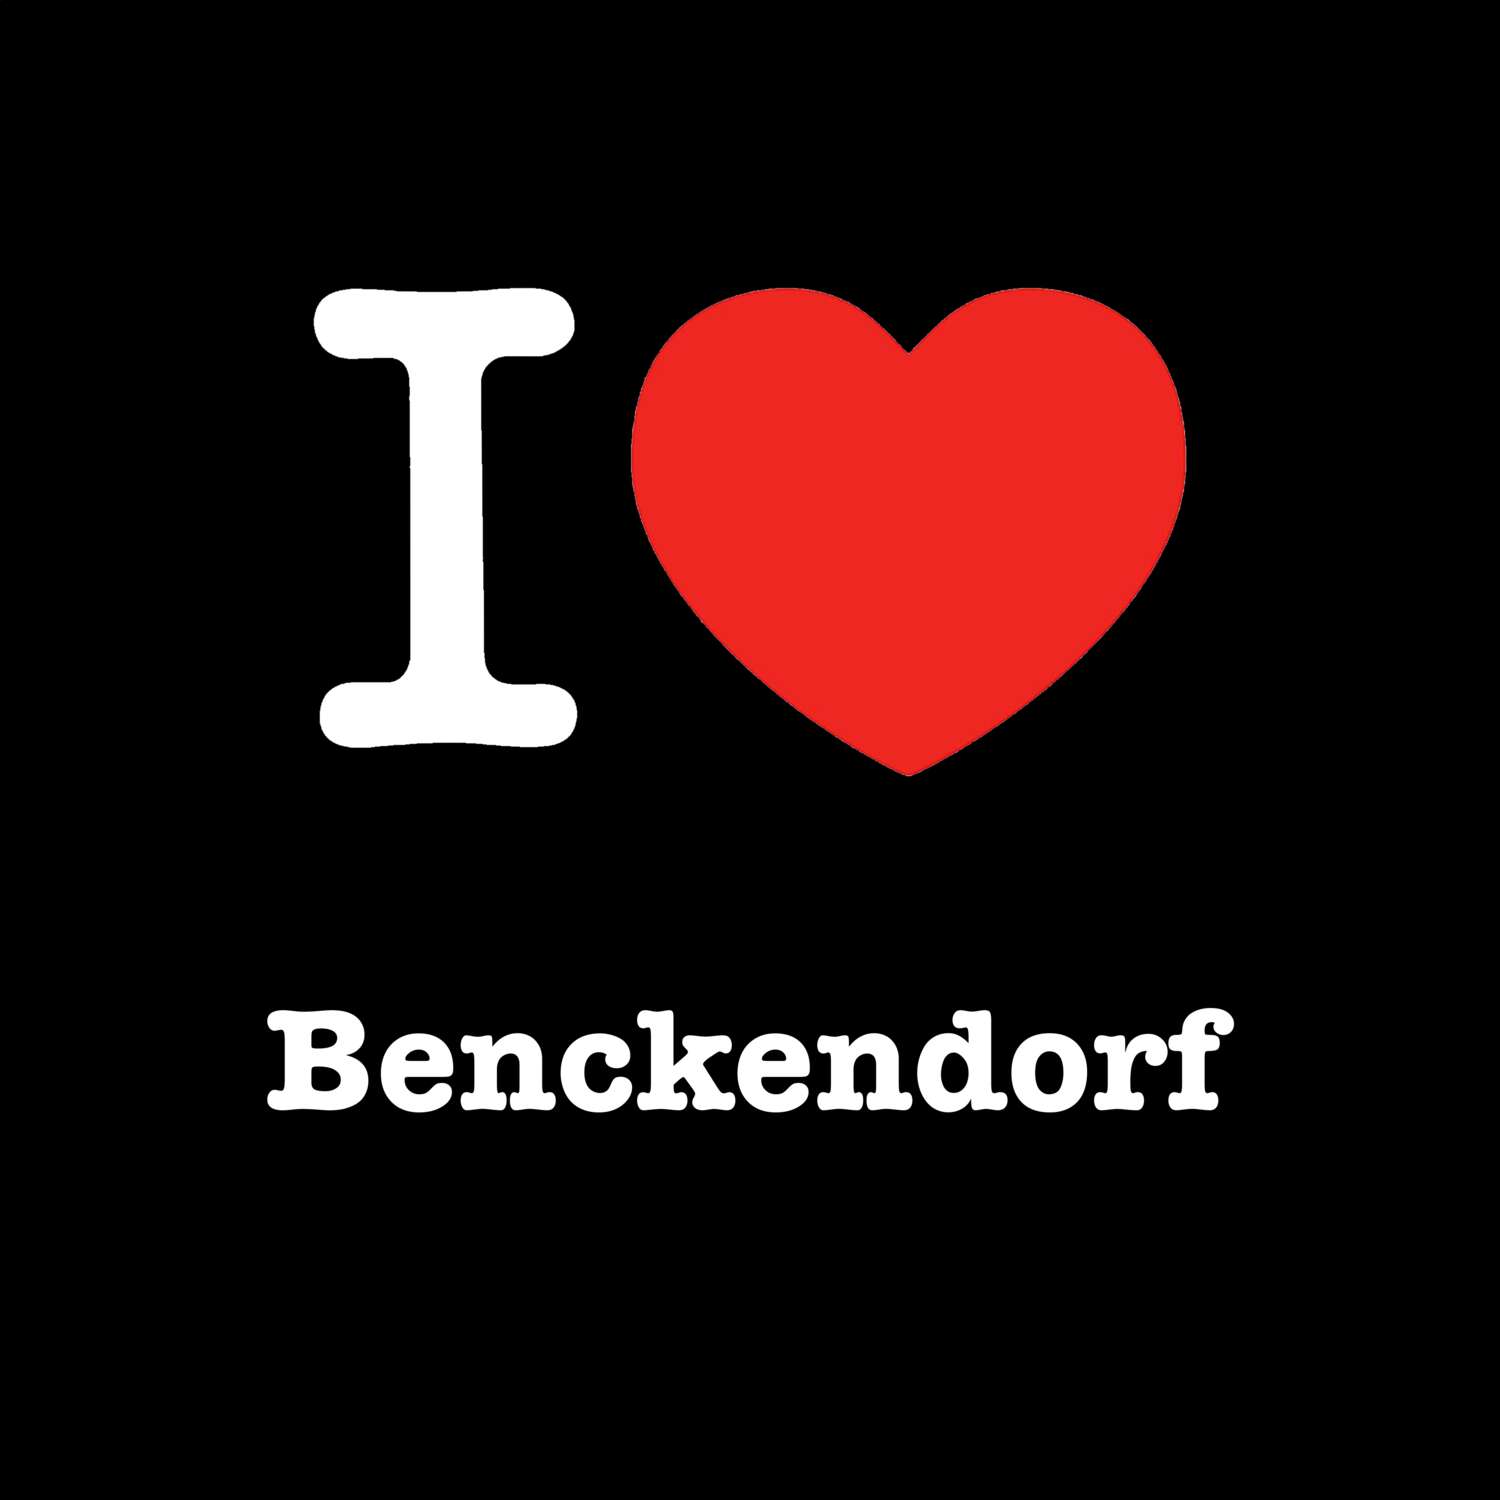 Benckendorf T-Shirt »I love«